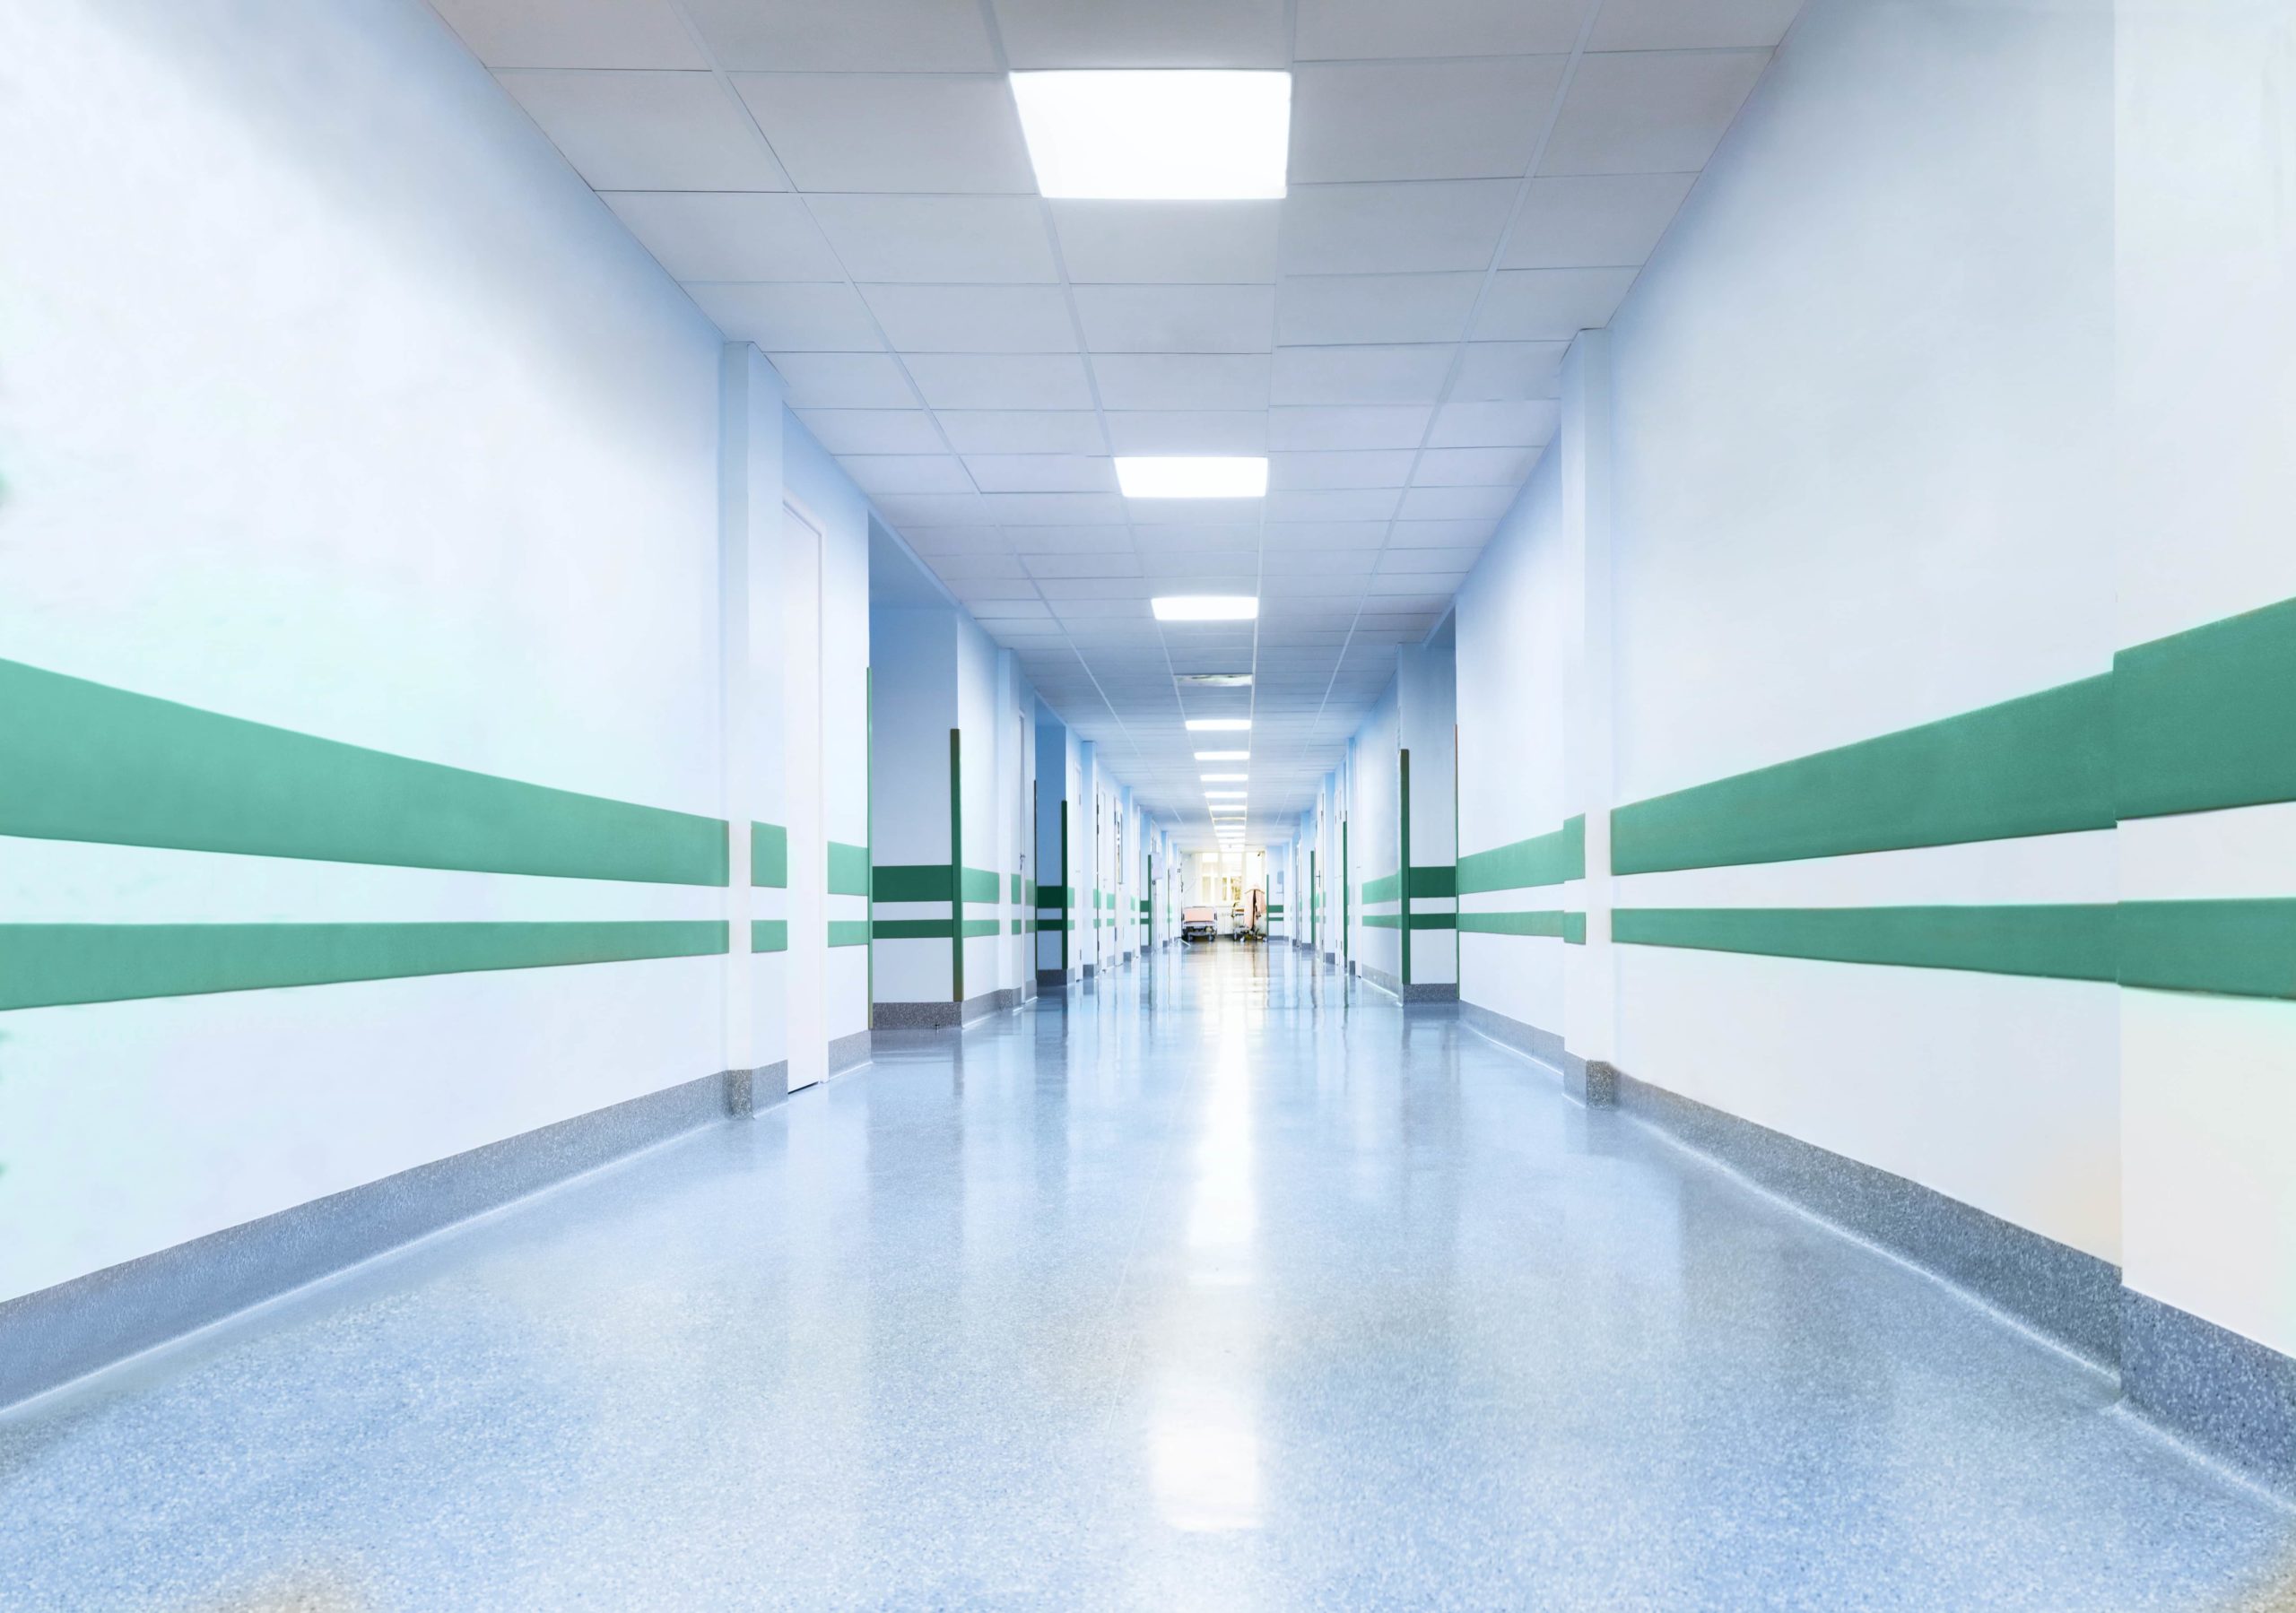 Long hallway of a medical building